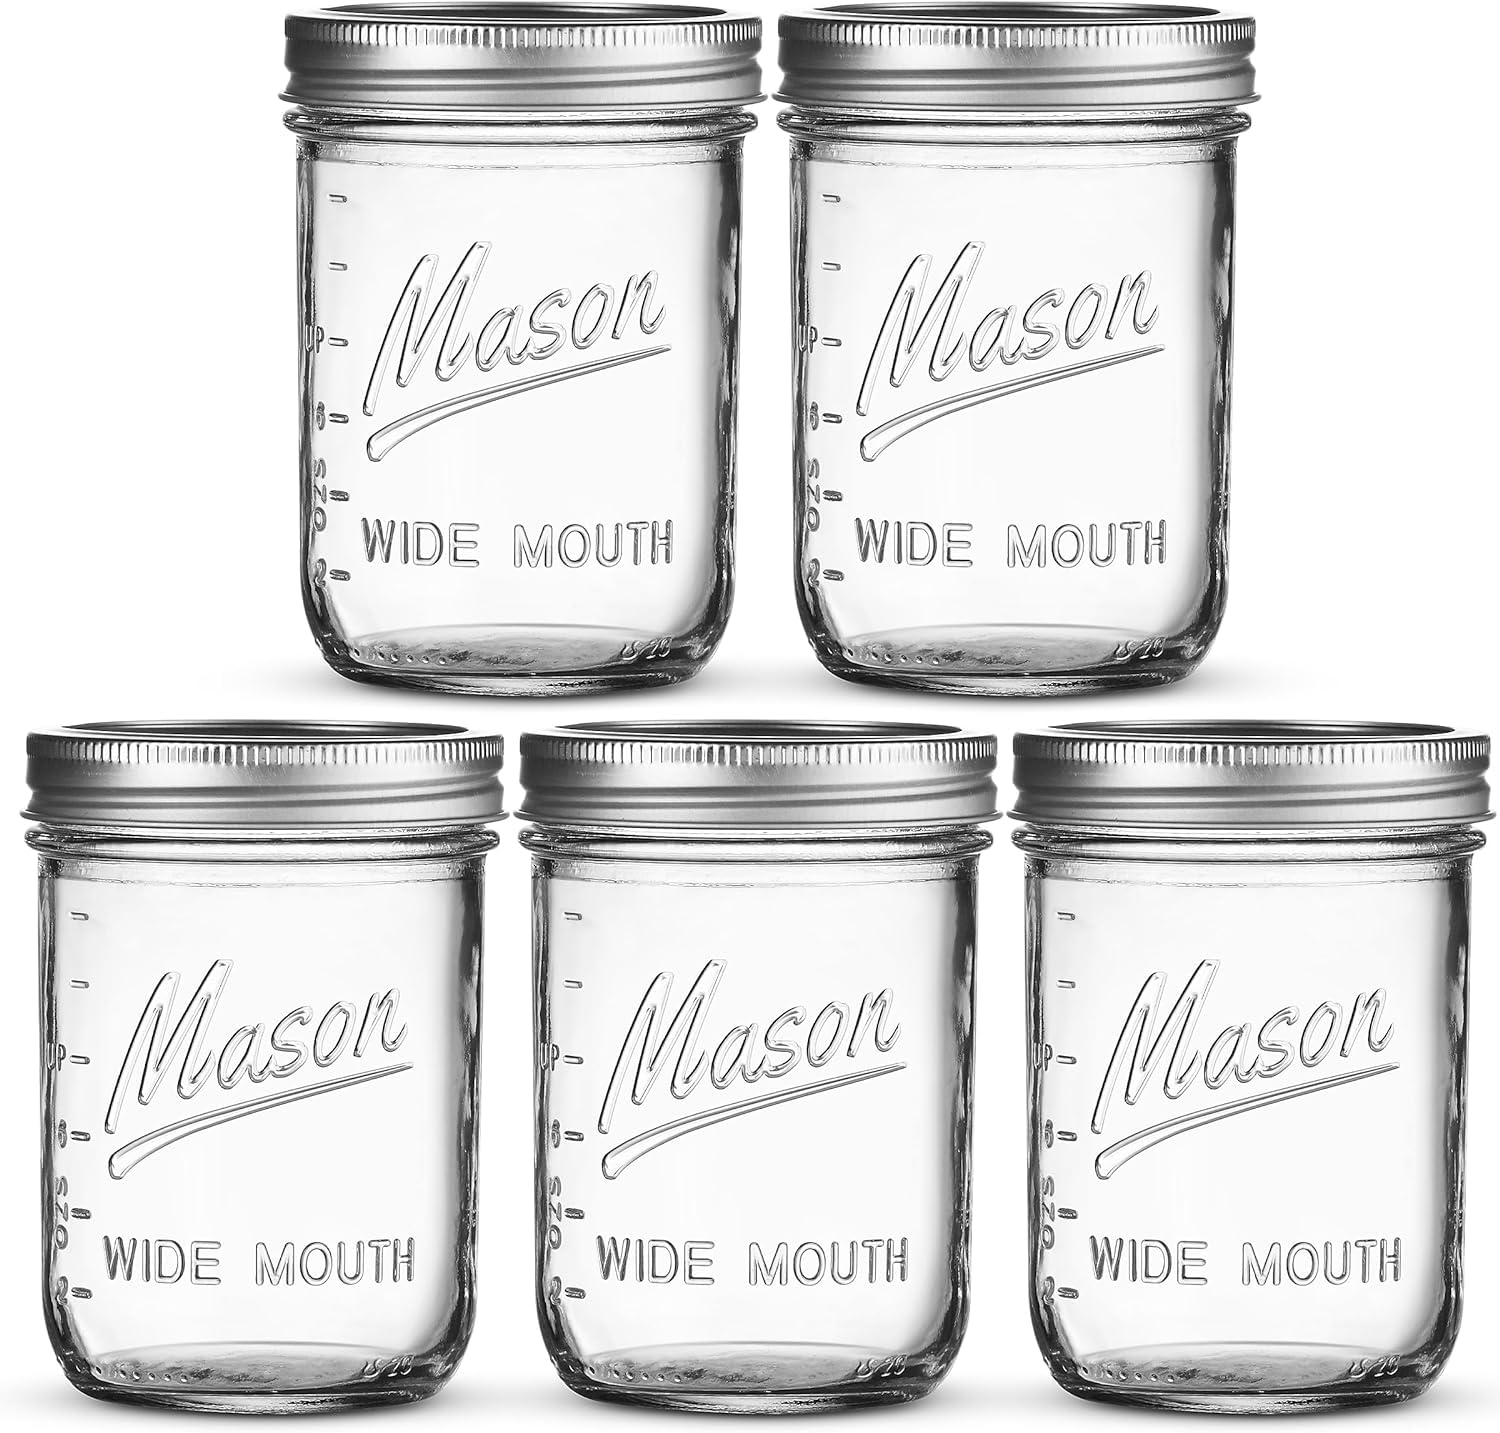 SEWANTA Wide Mouth Mason Jars 16 oz With mason jar lids and Bands, mason jars 16 oz - For Canning, Fermenting, Pickling - Jar D�cor - Microwave/Freeze/Dishwasher Safe. (4)  - Like New